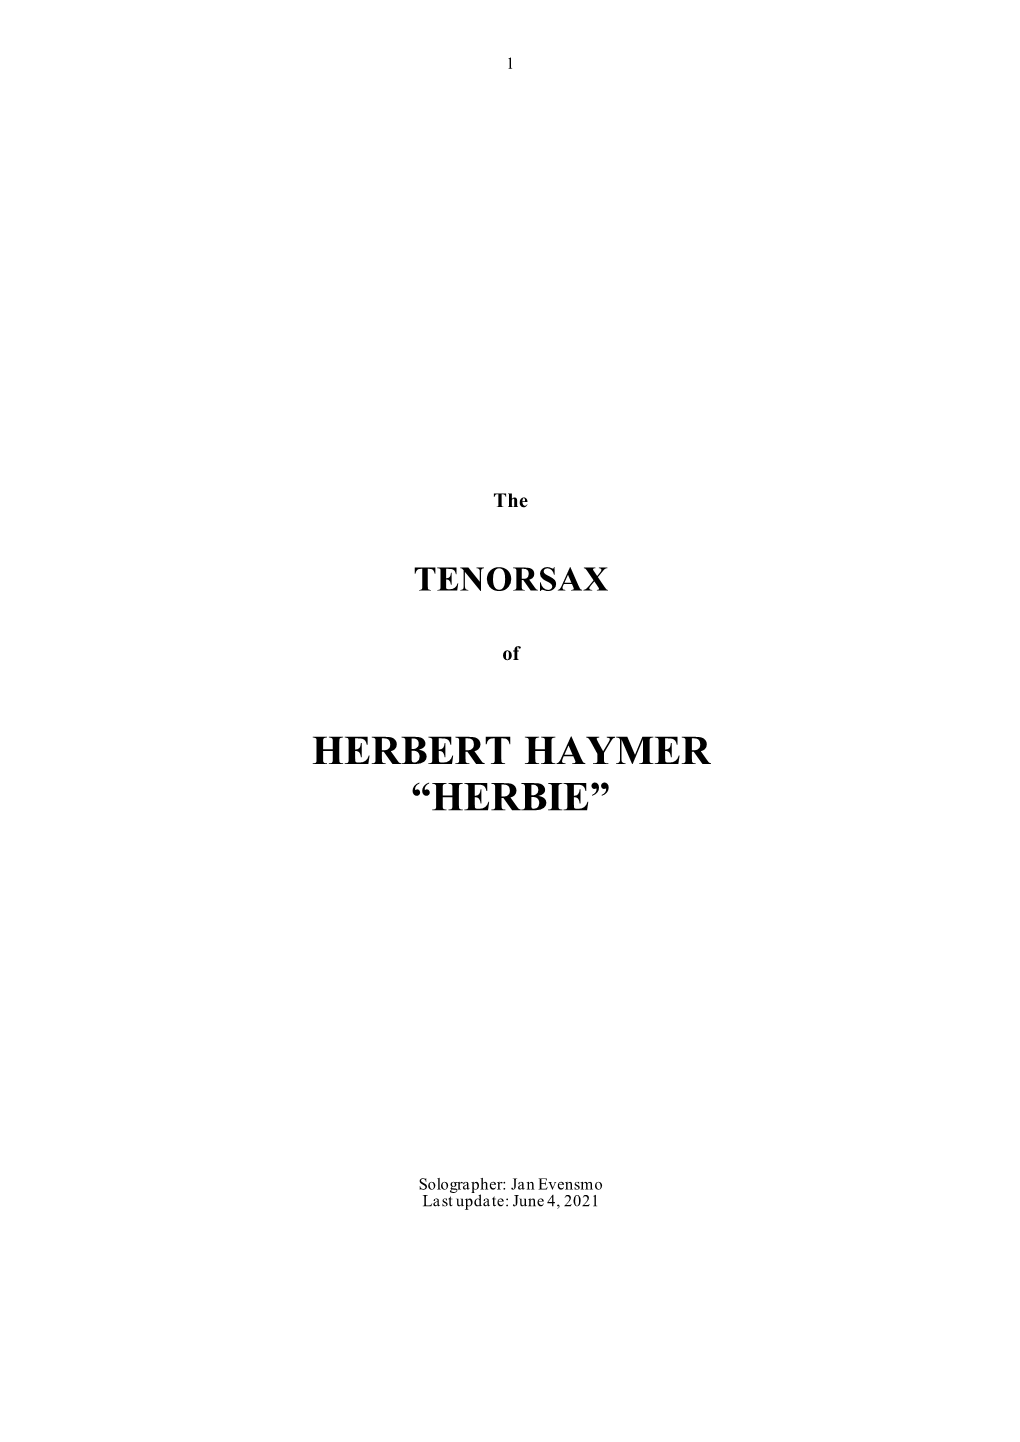 Download the Tenor Saxophone of Herbie Haymer (PDF-File)